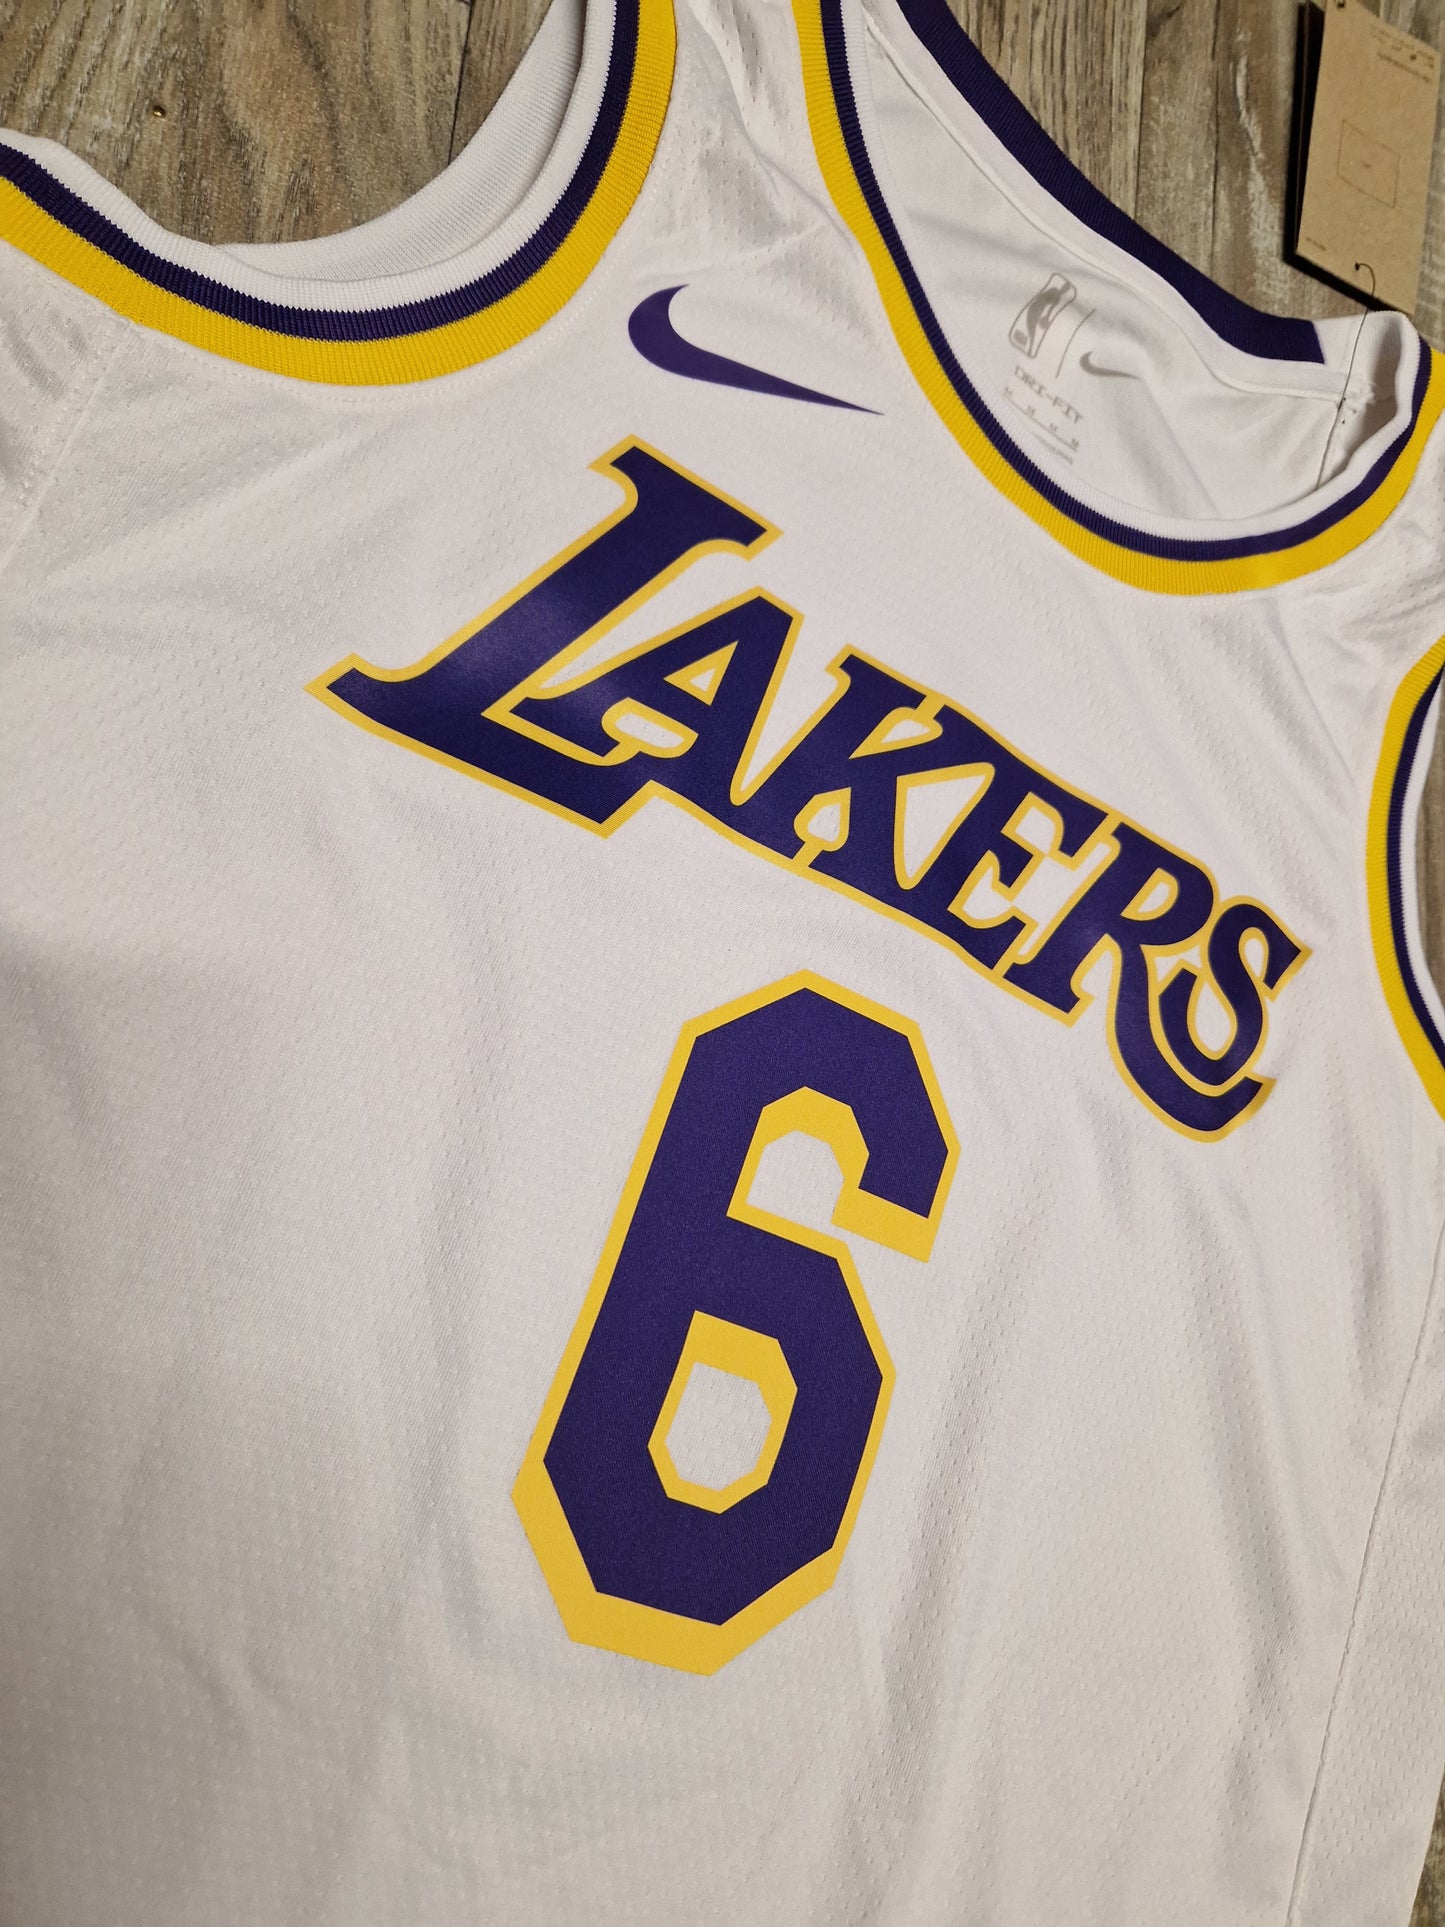 LeBron James Los Angeles Lakers Jersey Size Medium